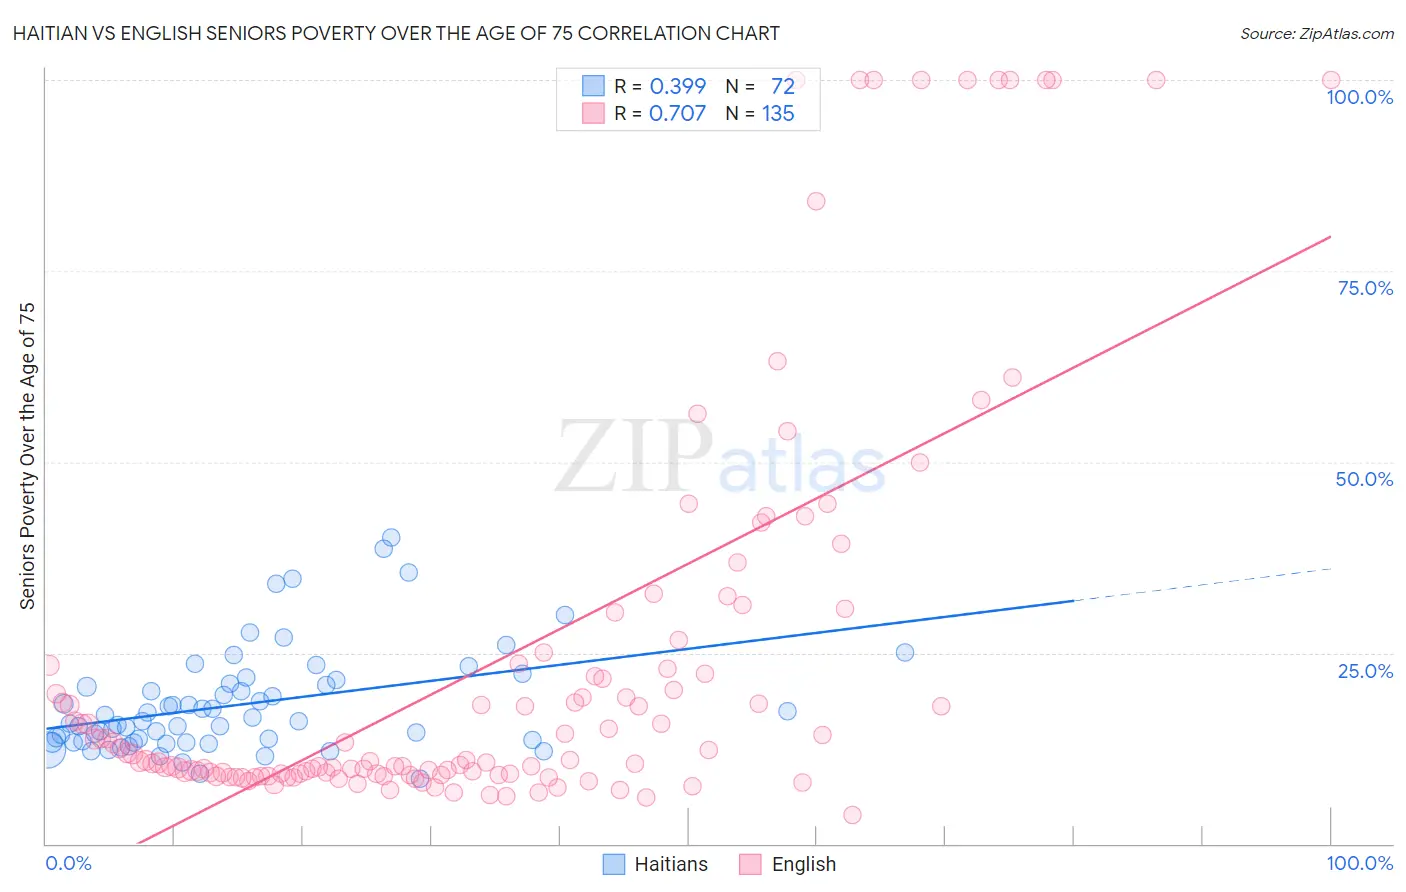 Haitian vs English Seniors Poverty Over the Age of 75